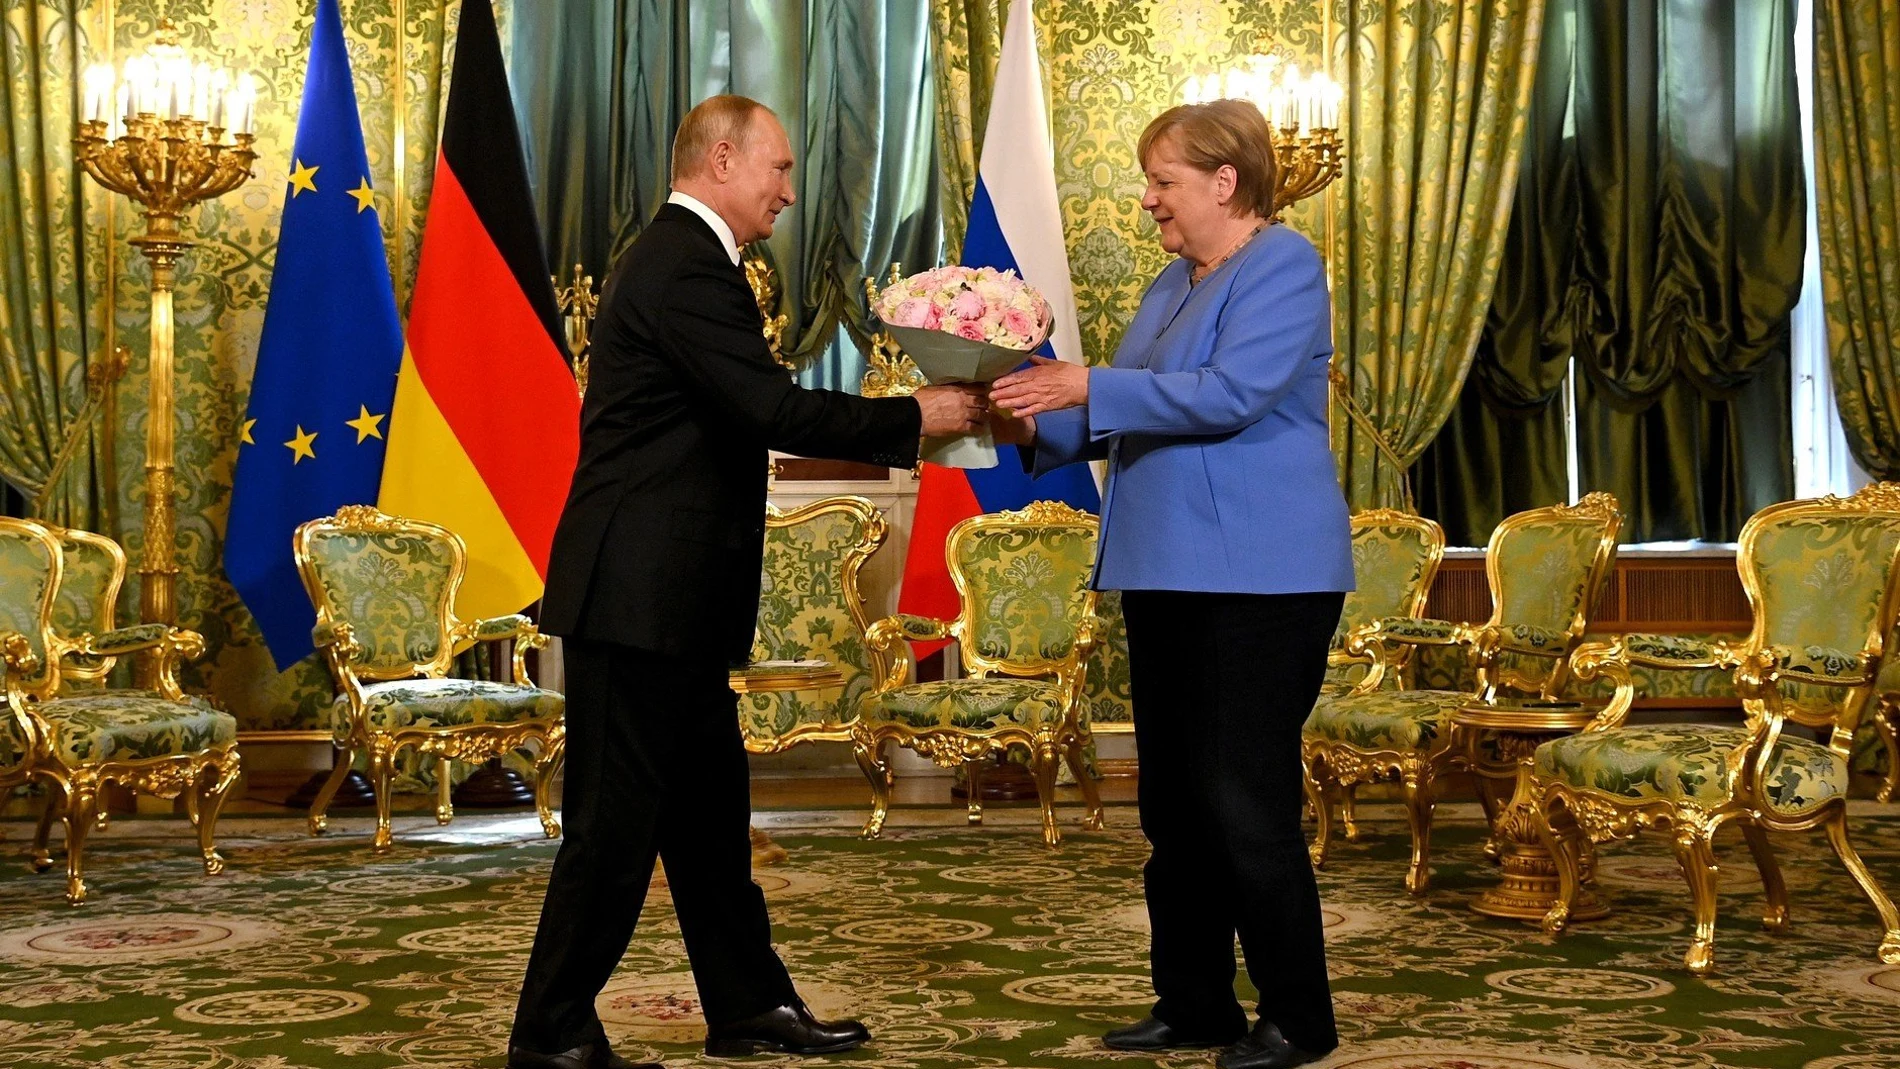 El líder ruso, Vladimir Putin, recibe ayer en el Kremlin a la canciller Angela Merkel